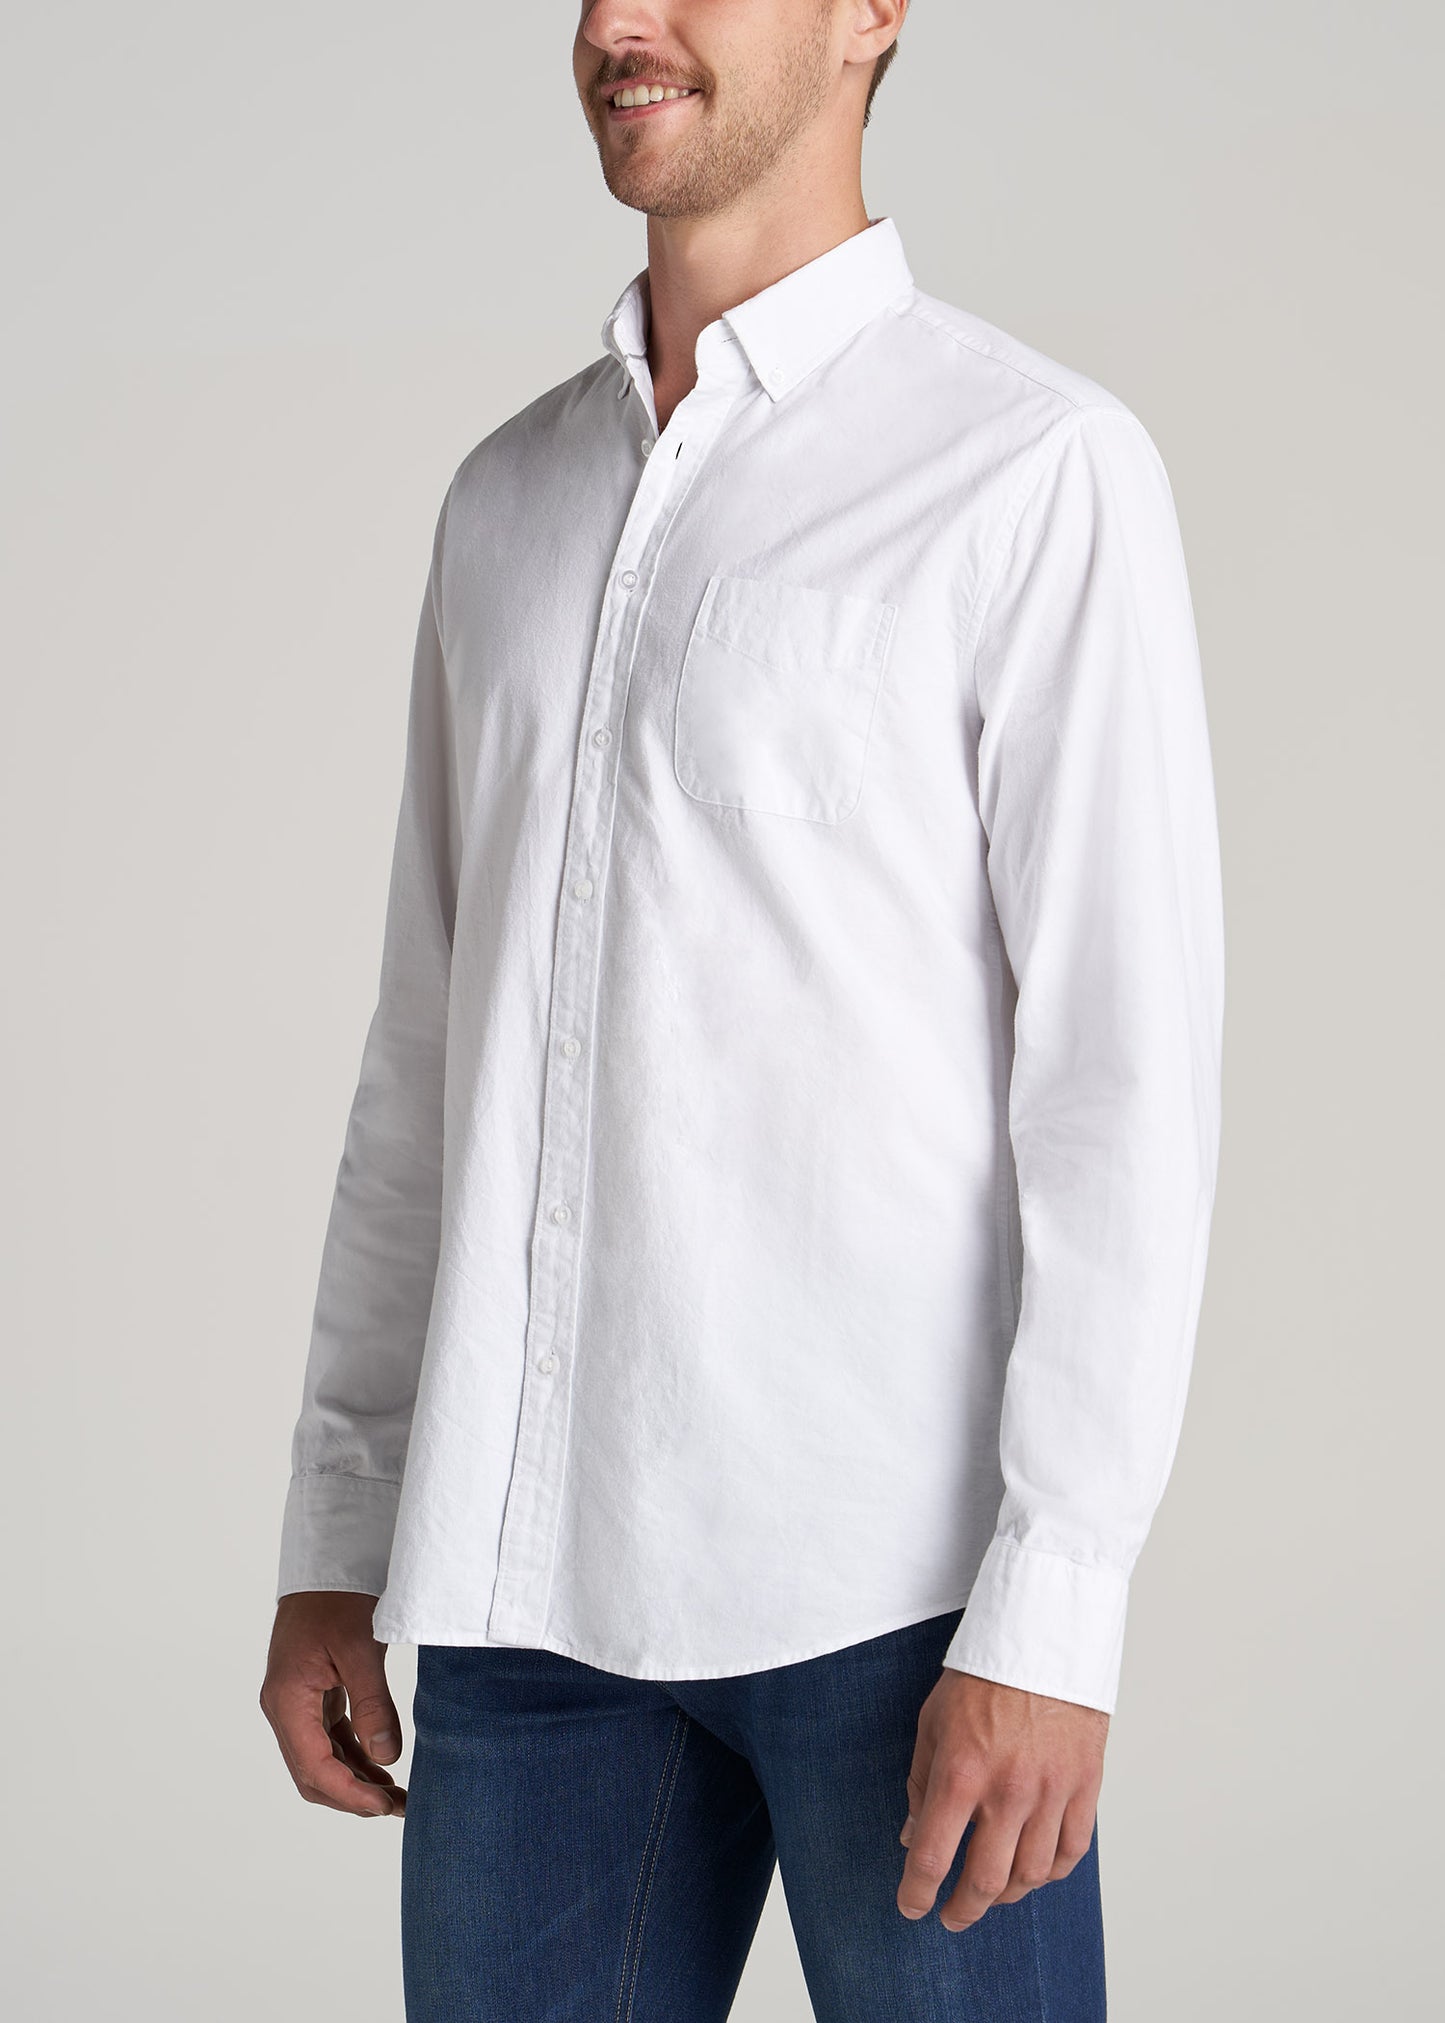 Oskar Button-Up Dress Shirt for Tall Men in Bright White